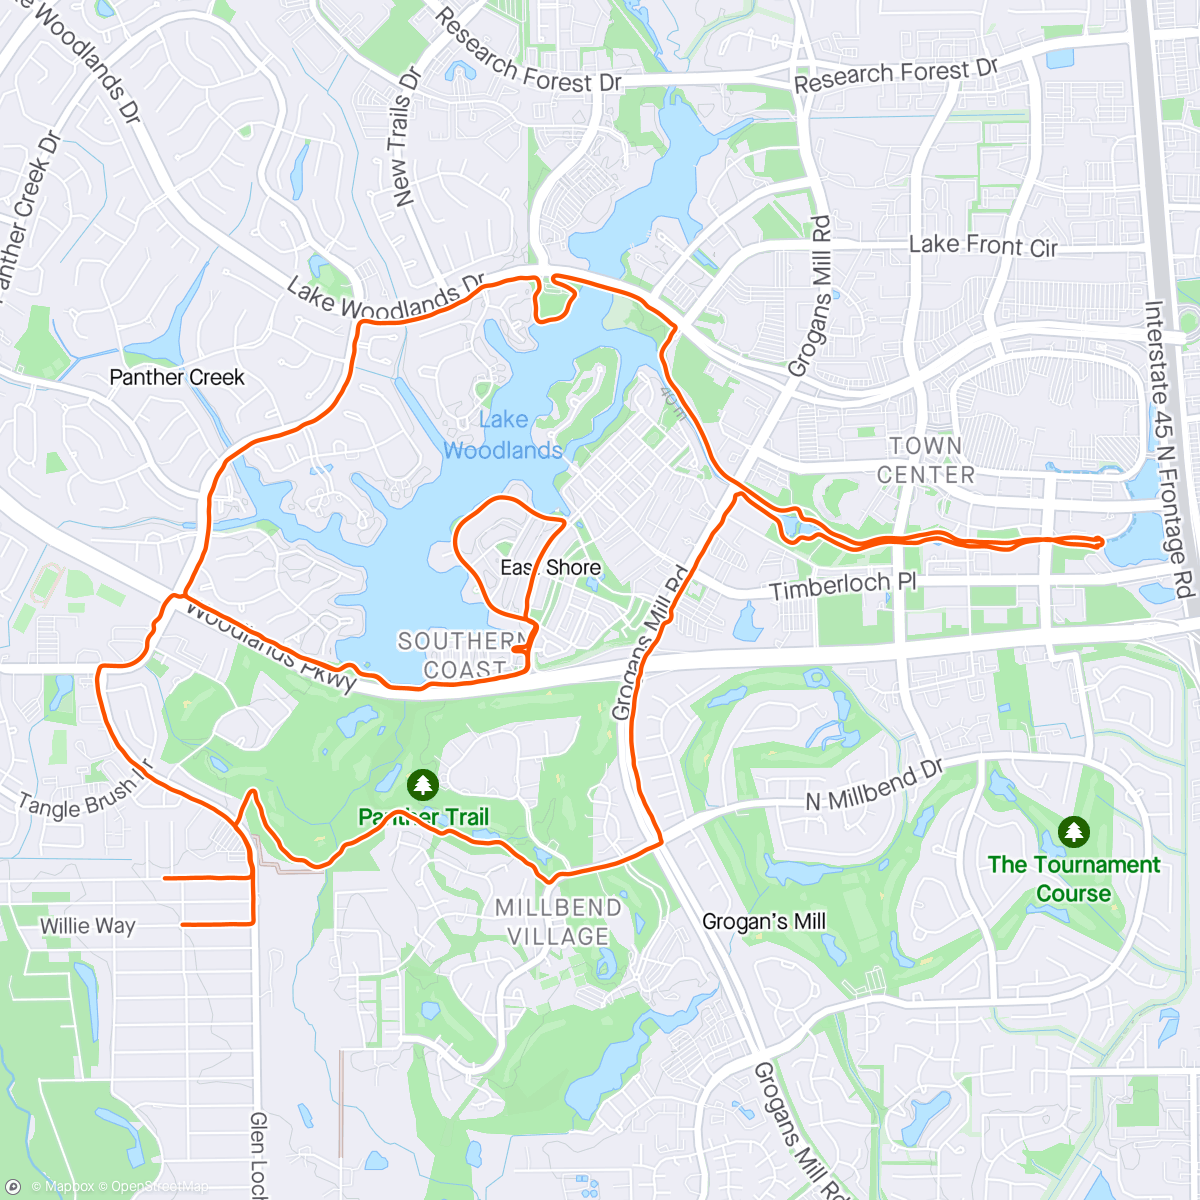 「Run course recon」活動的地圖